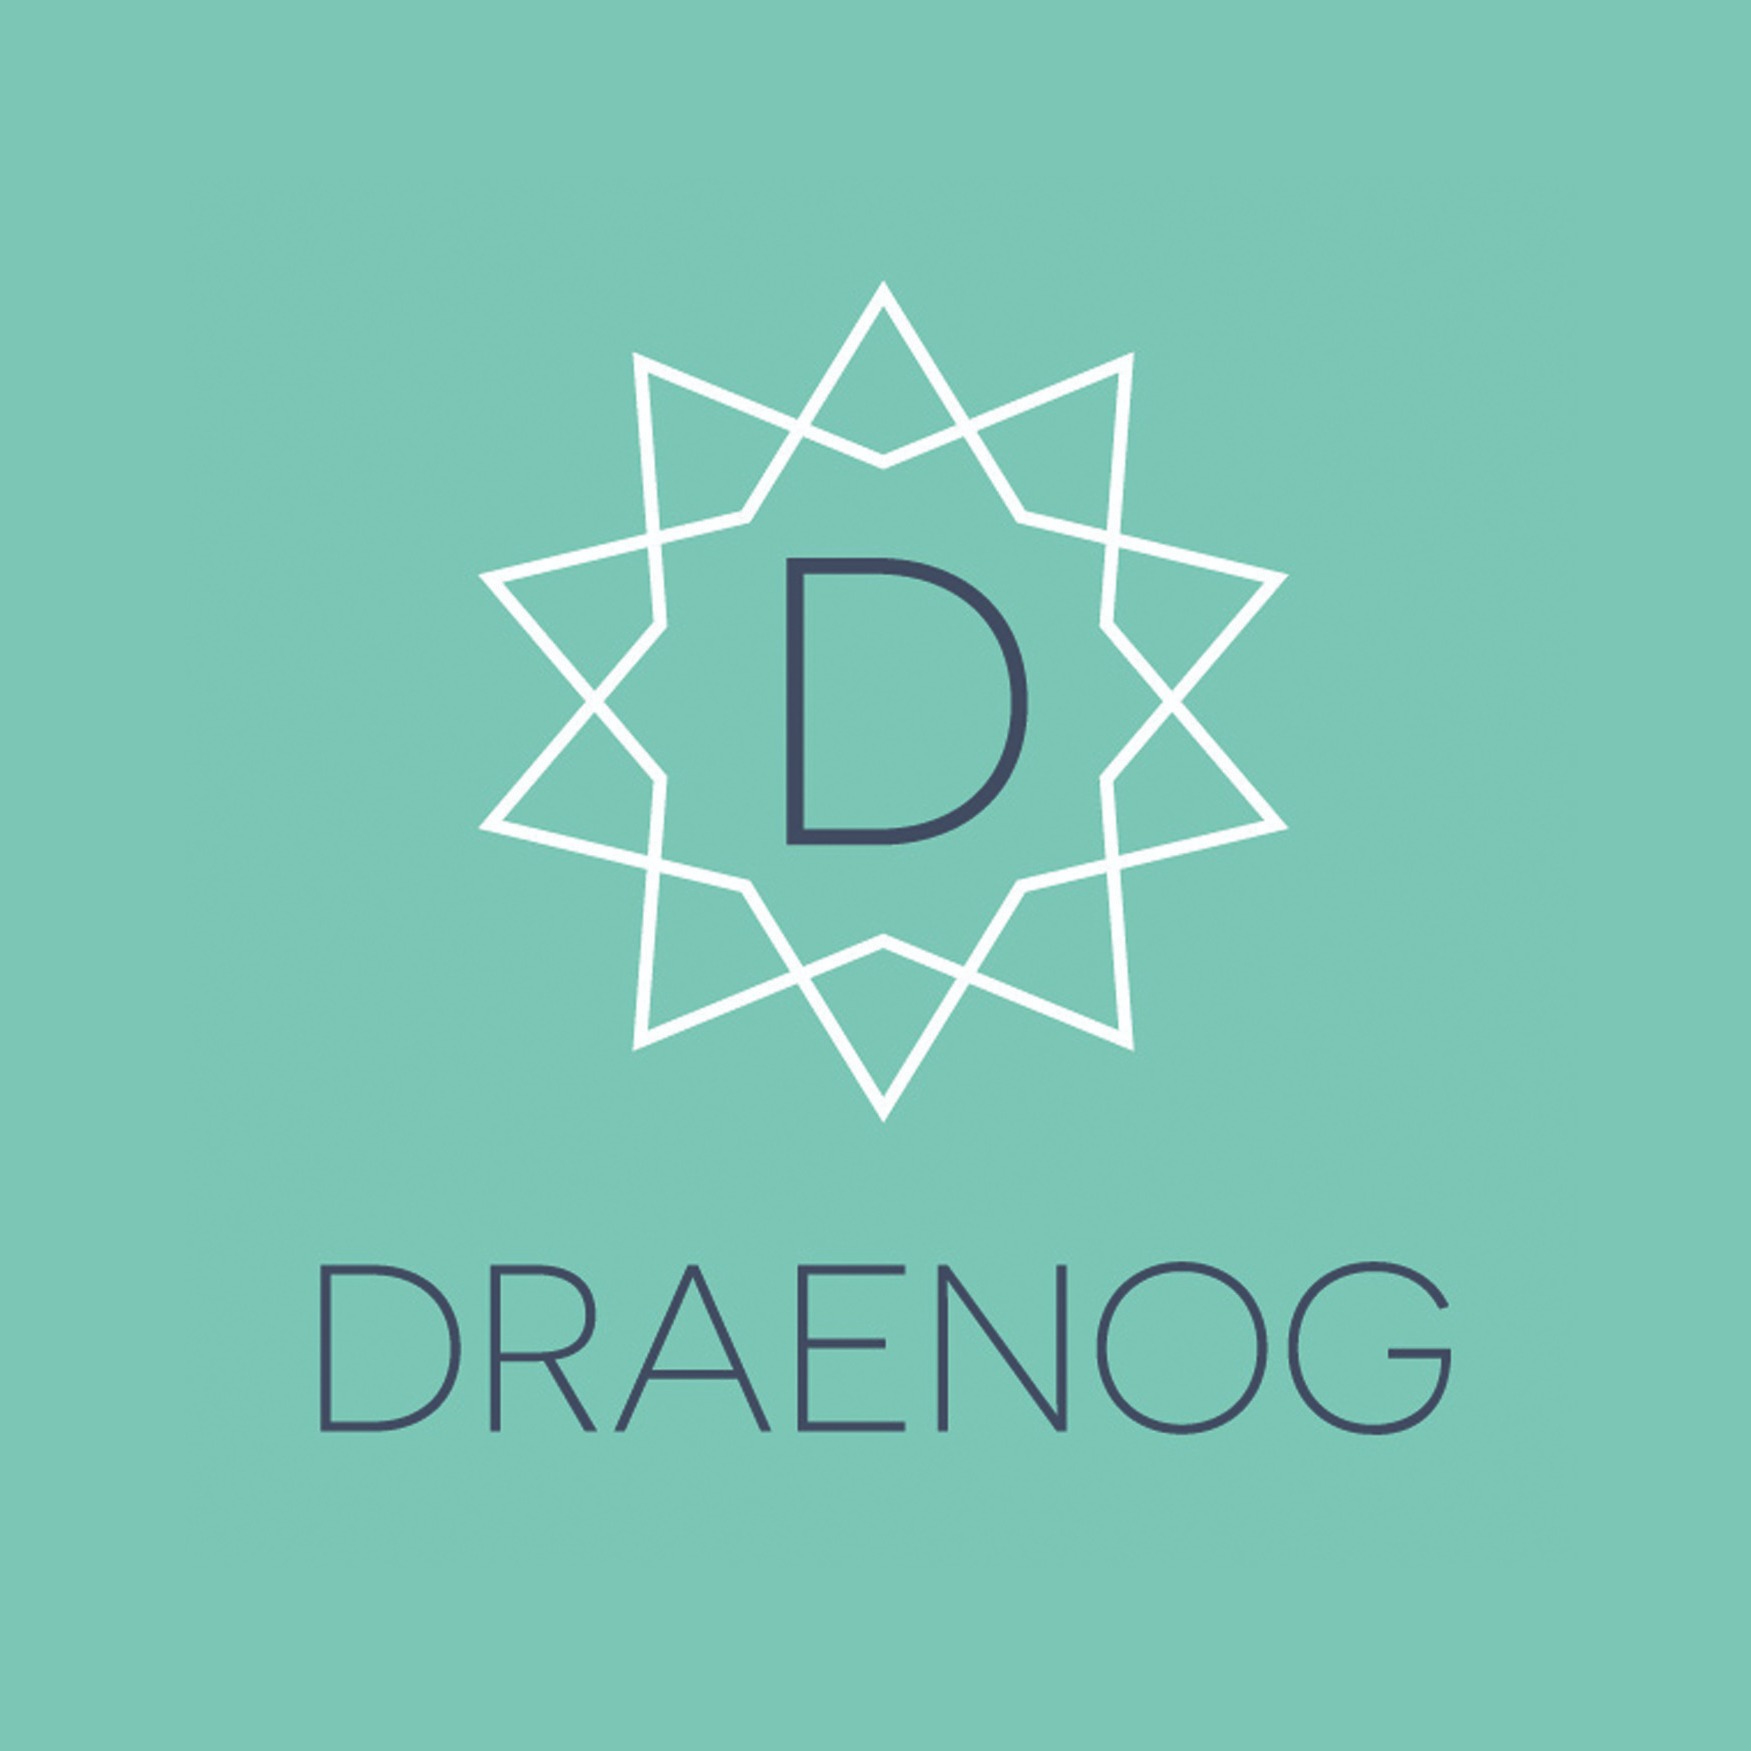 Draenog Design